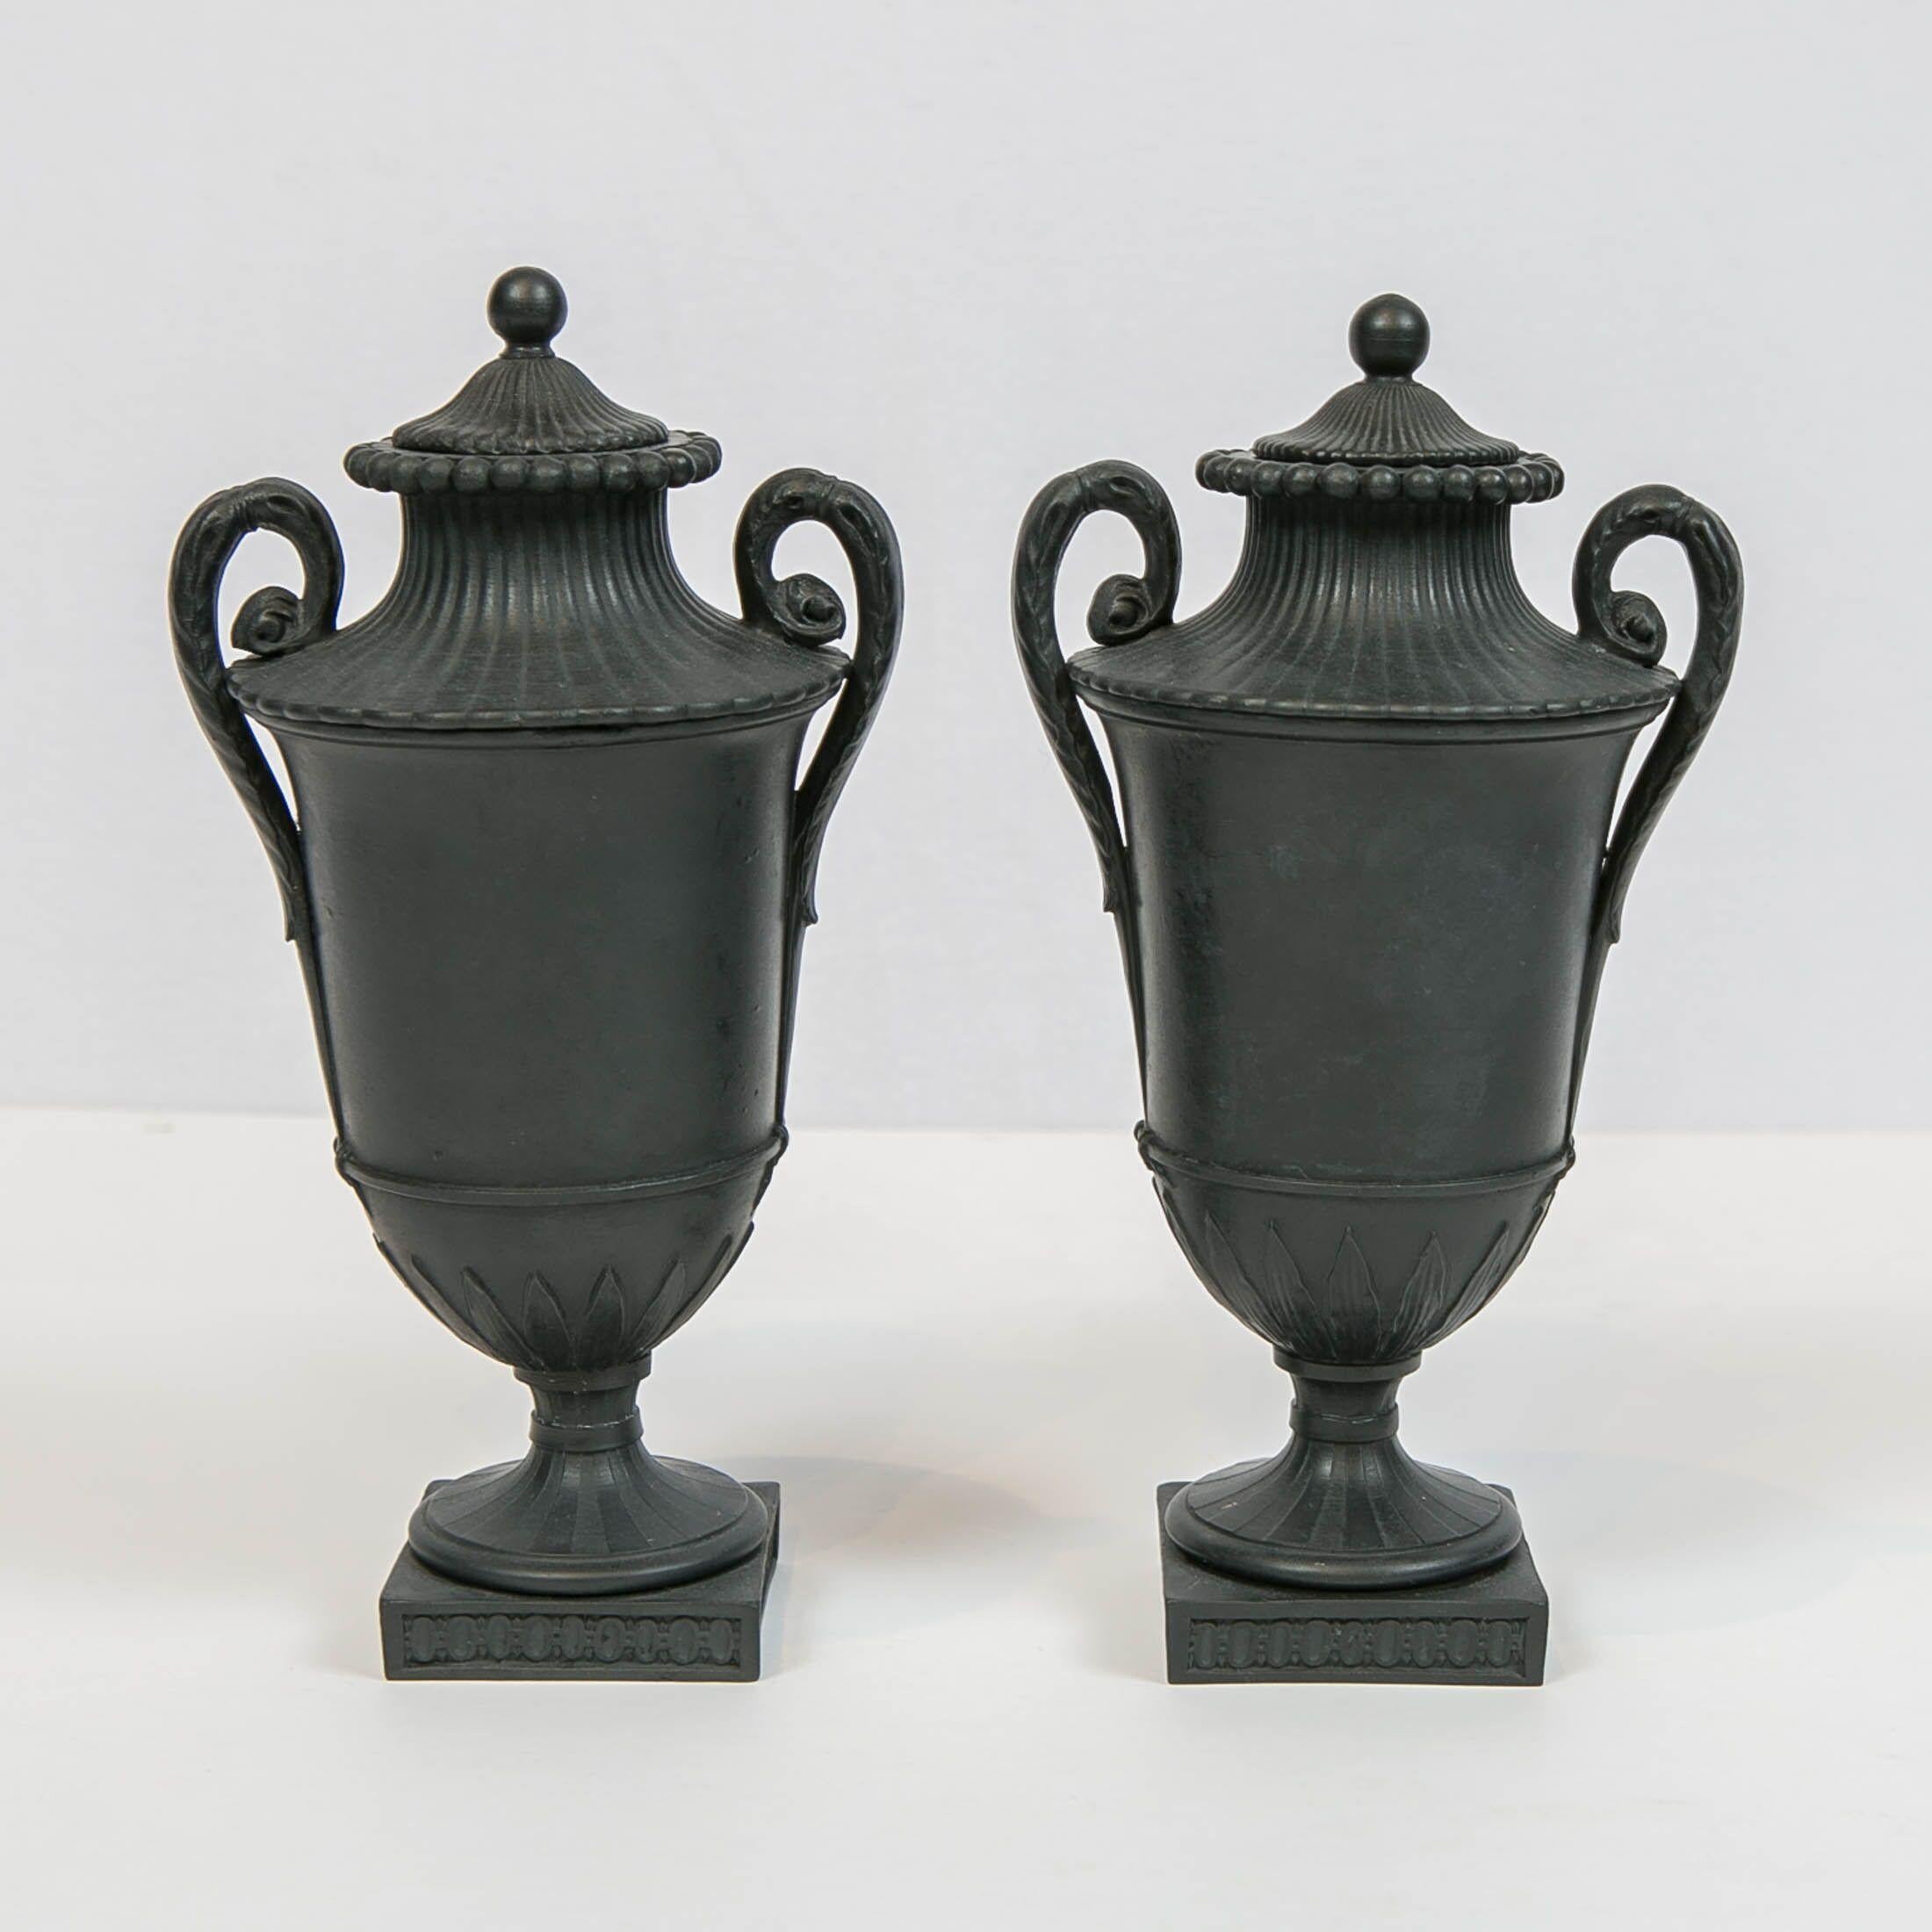 English Pair of Small Wedgwood Black Basalt Vases Made circa 1800